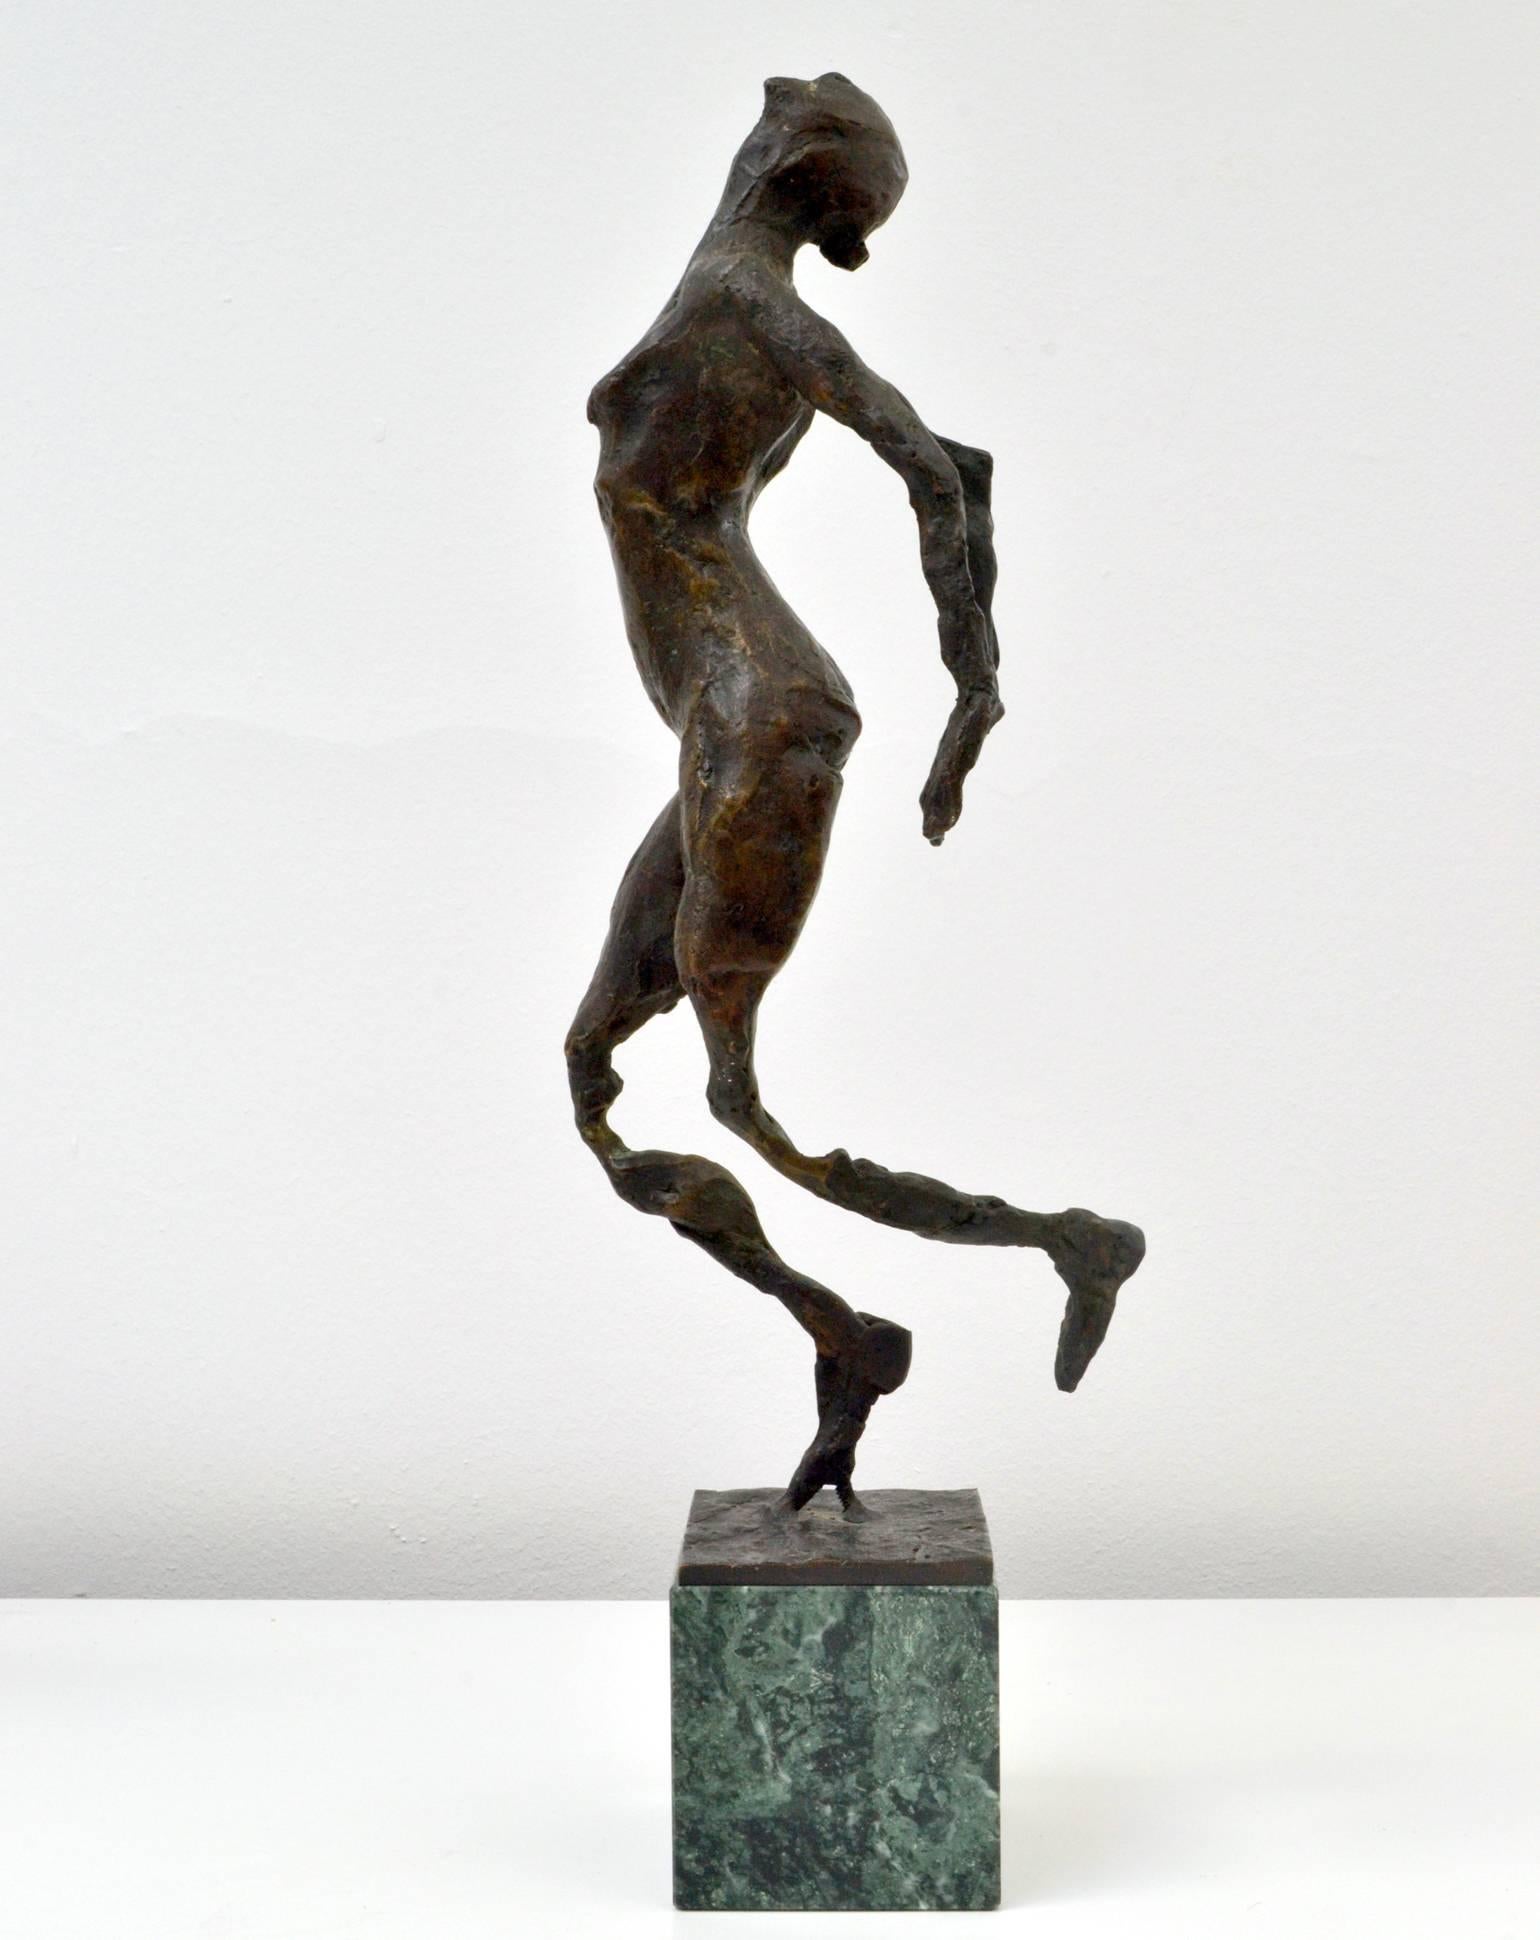 Sculpture of a Dancing Figure in Bronze by Dutch Frijling 1